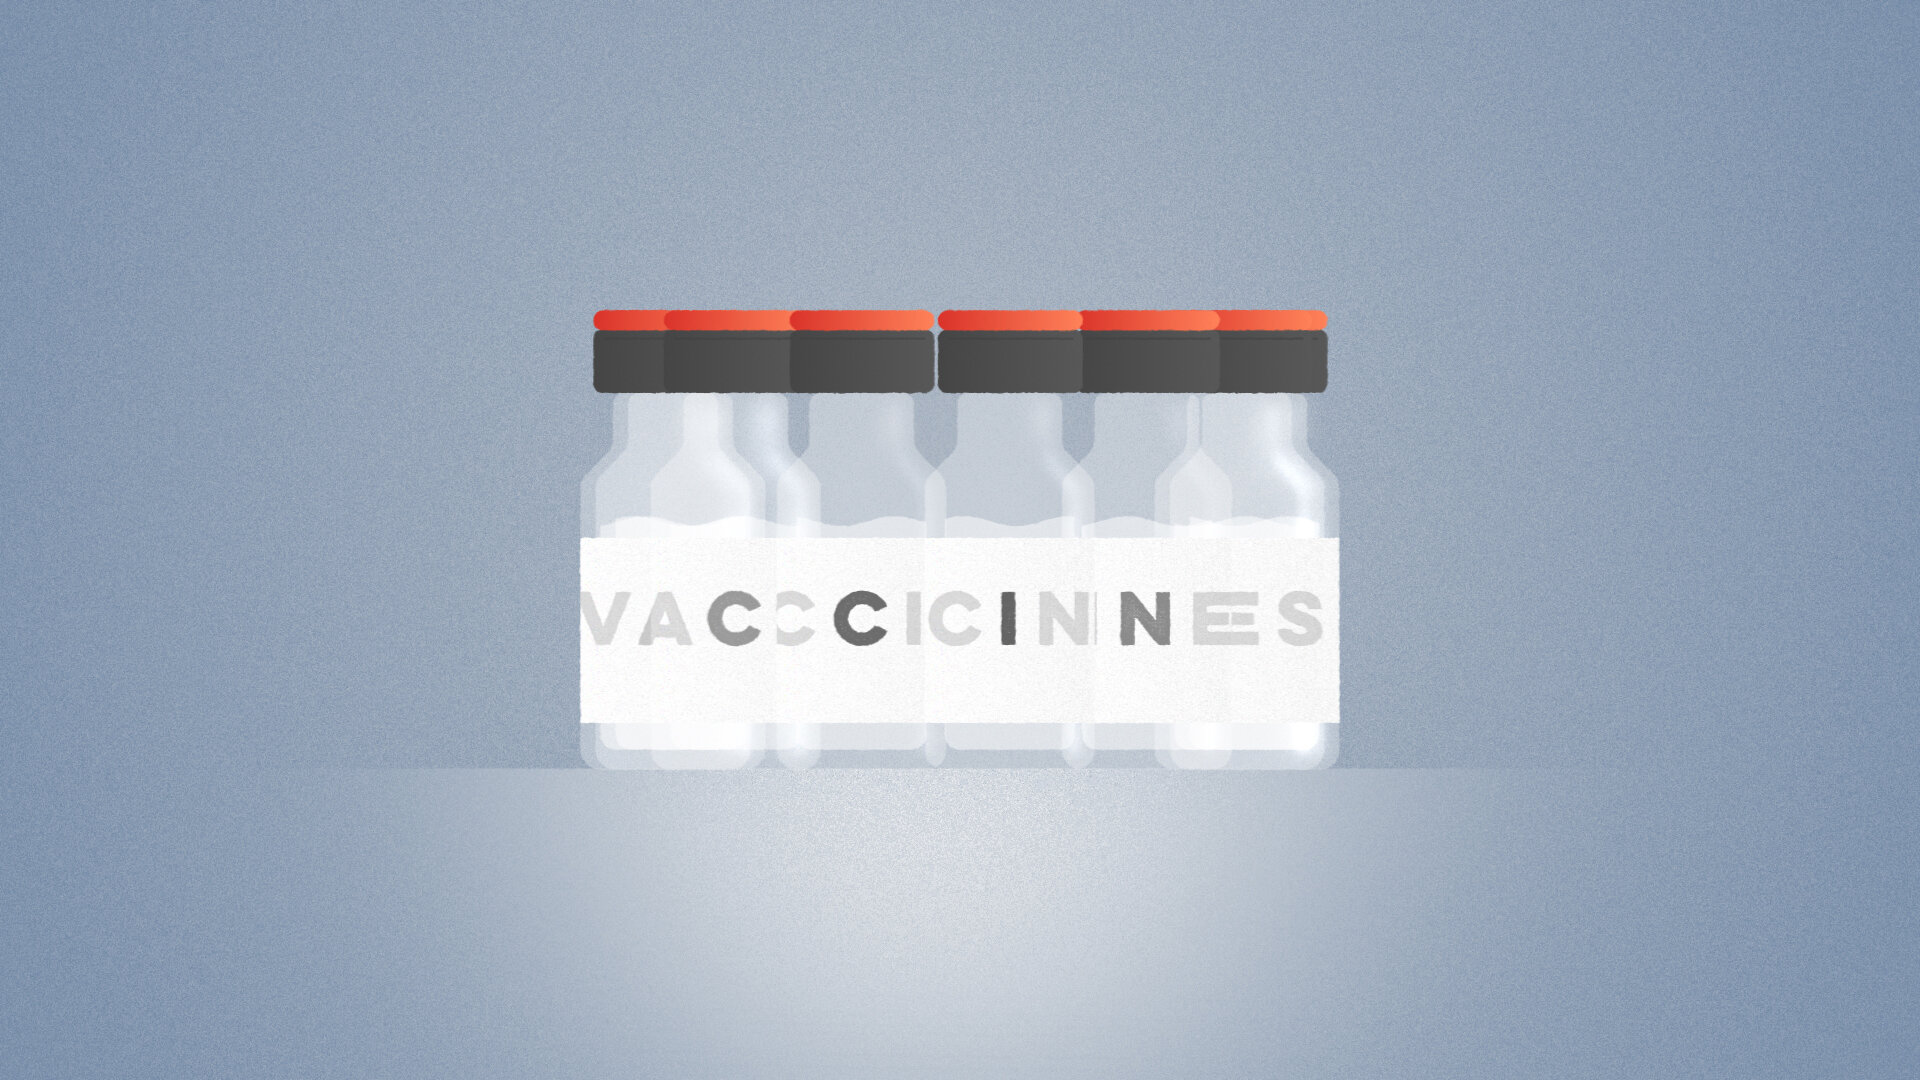 TED_Vaccines_02_Vaccines.jpg